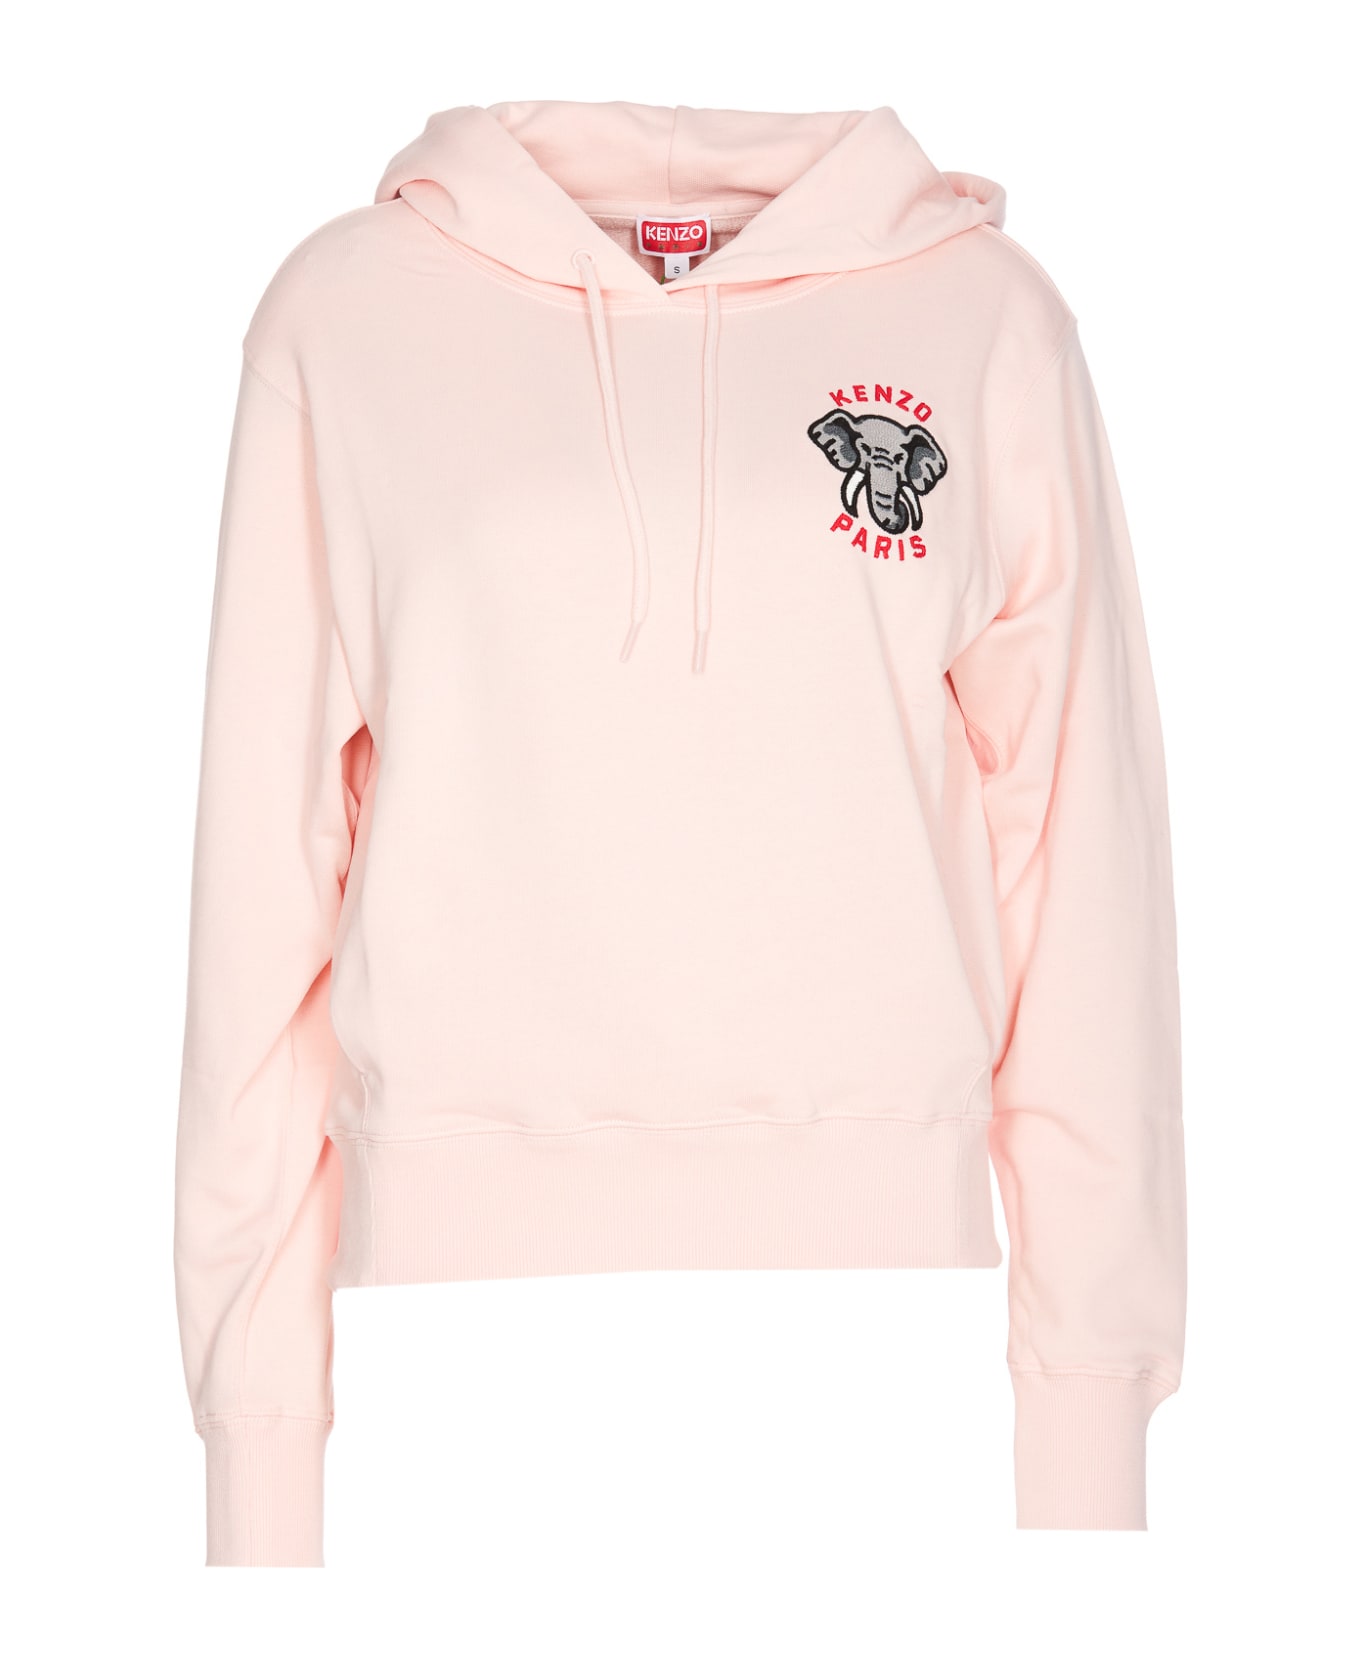 Kenzo Elephant Logo Hoodie - Pink